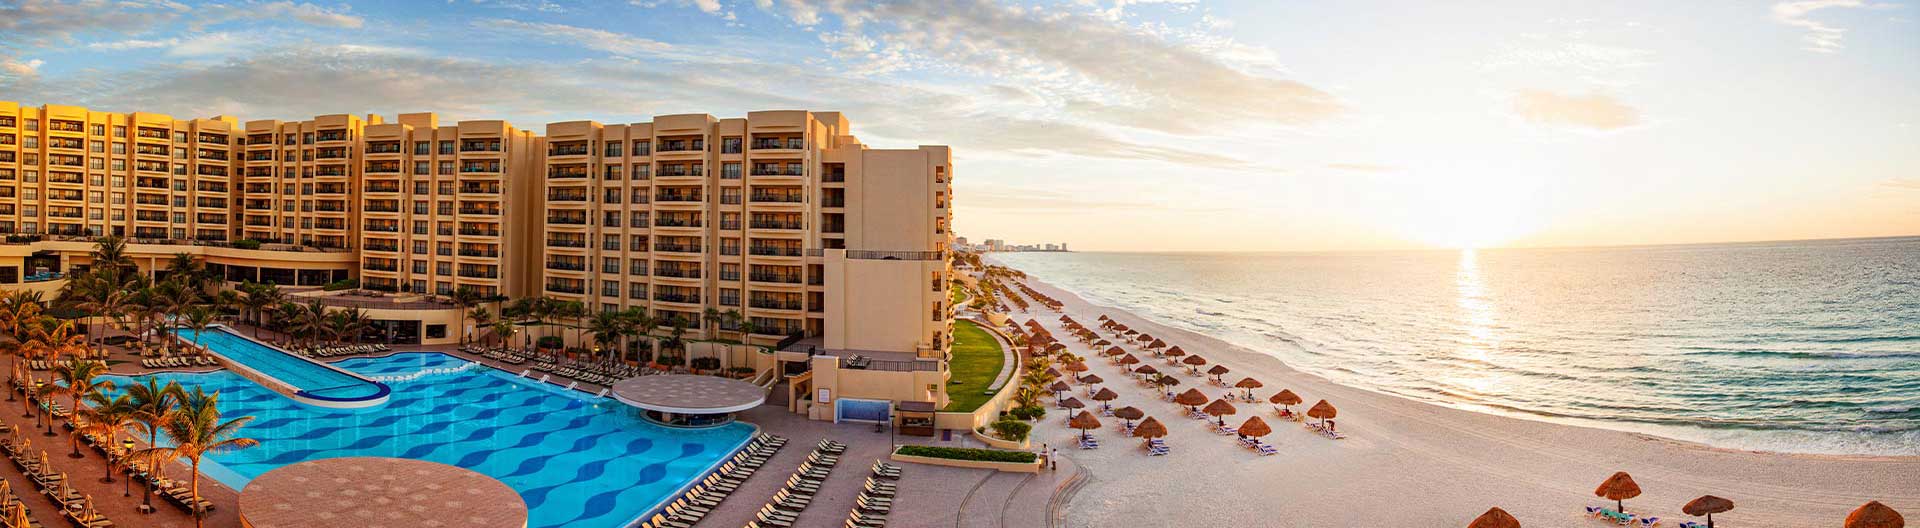 5-star hotels in Riviera Maya}